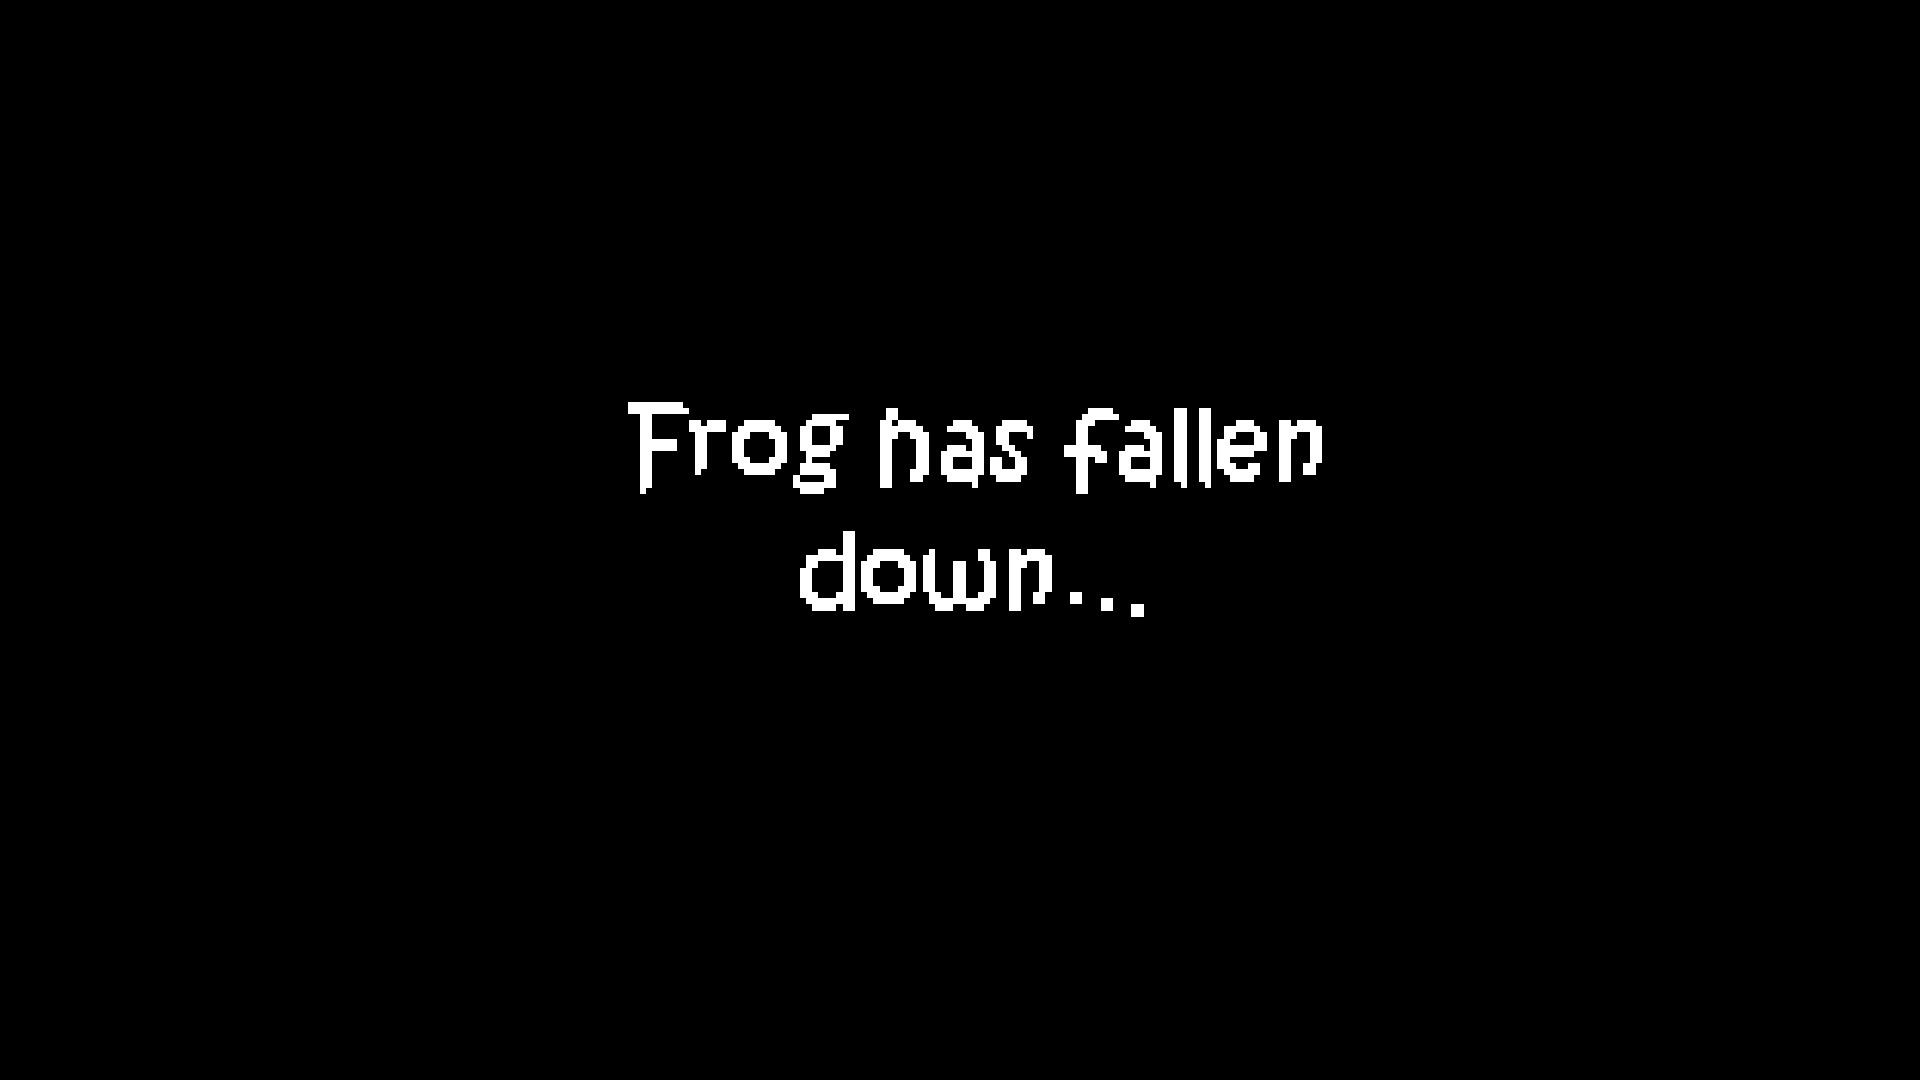 [$ 0.25] Frog Fall Down Steam CD Key